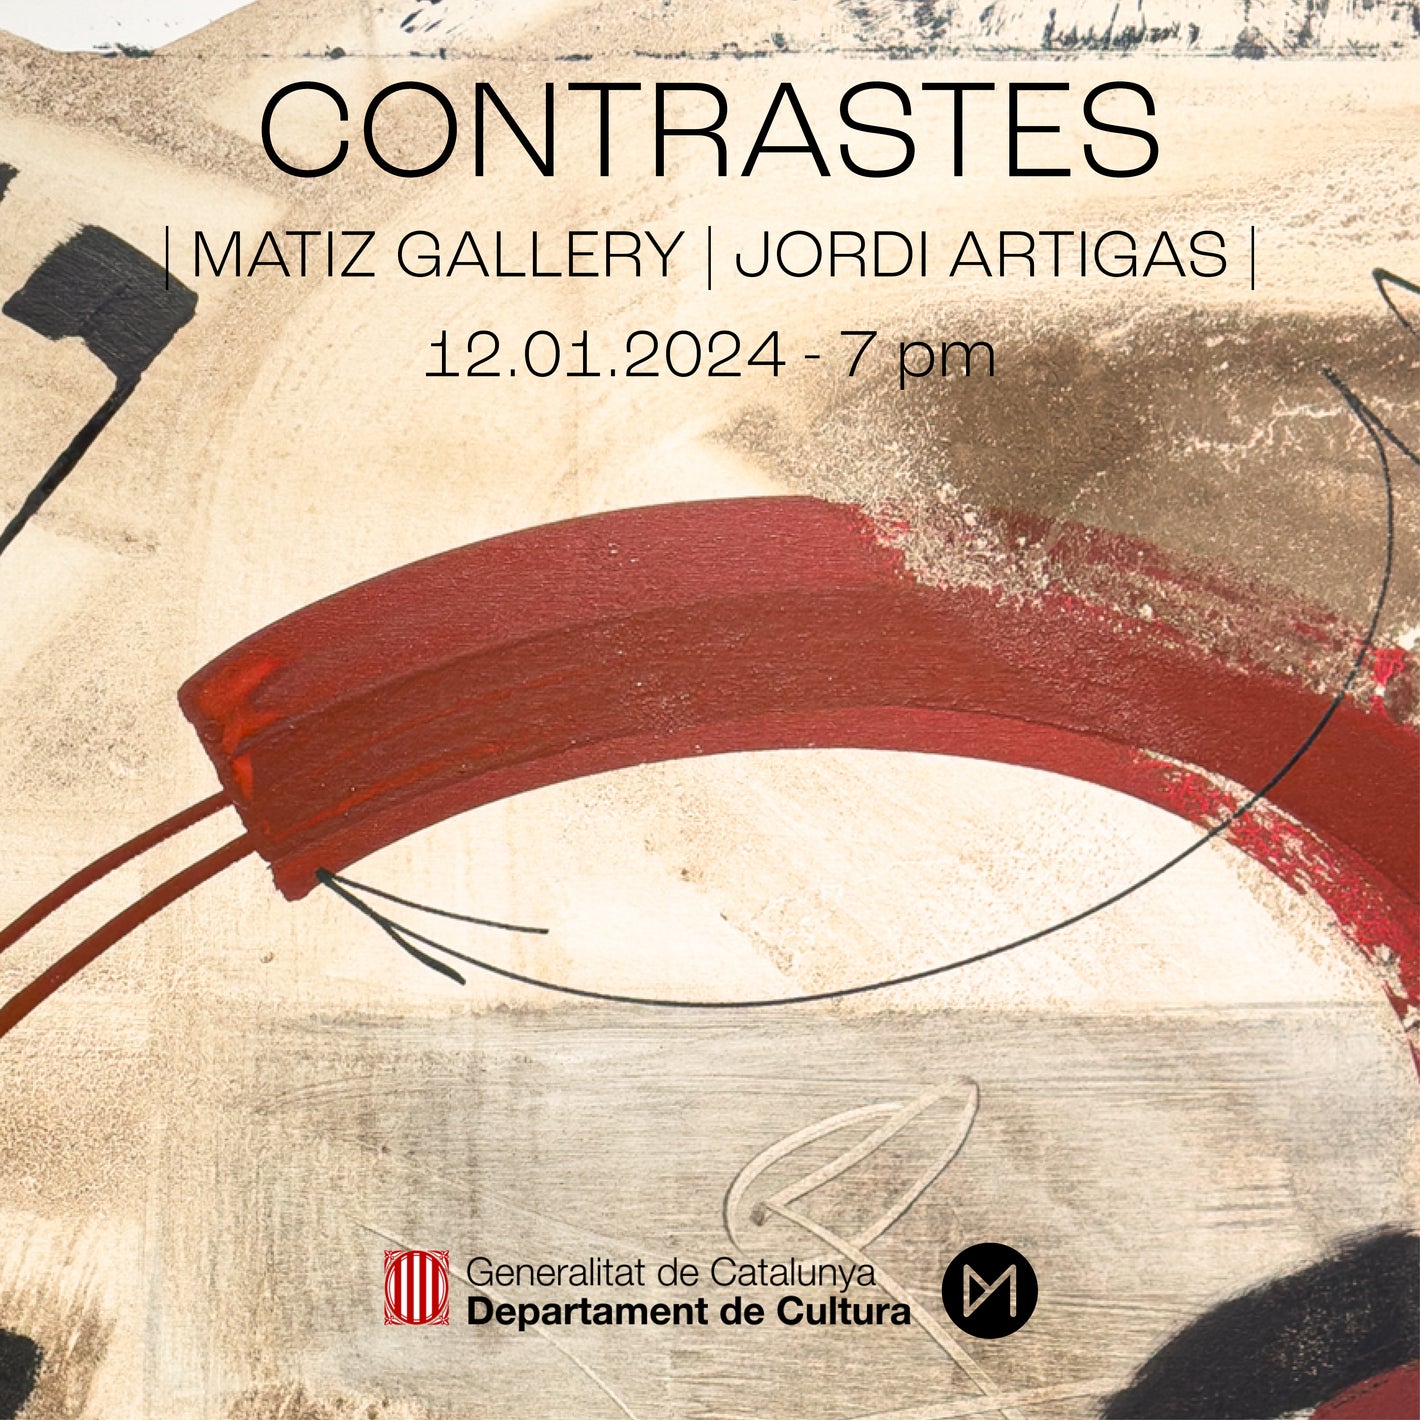 Art exhibition in matiz gallery by jordi artigas curator Juan Ramirez